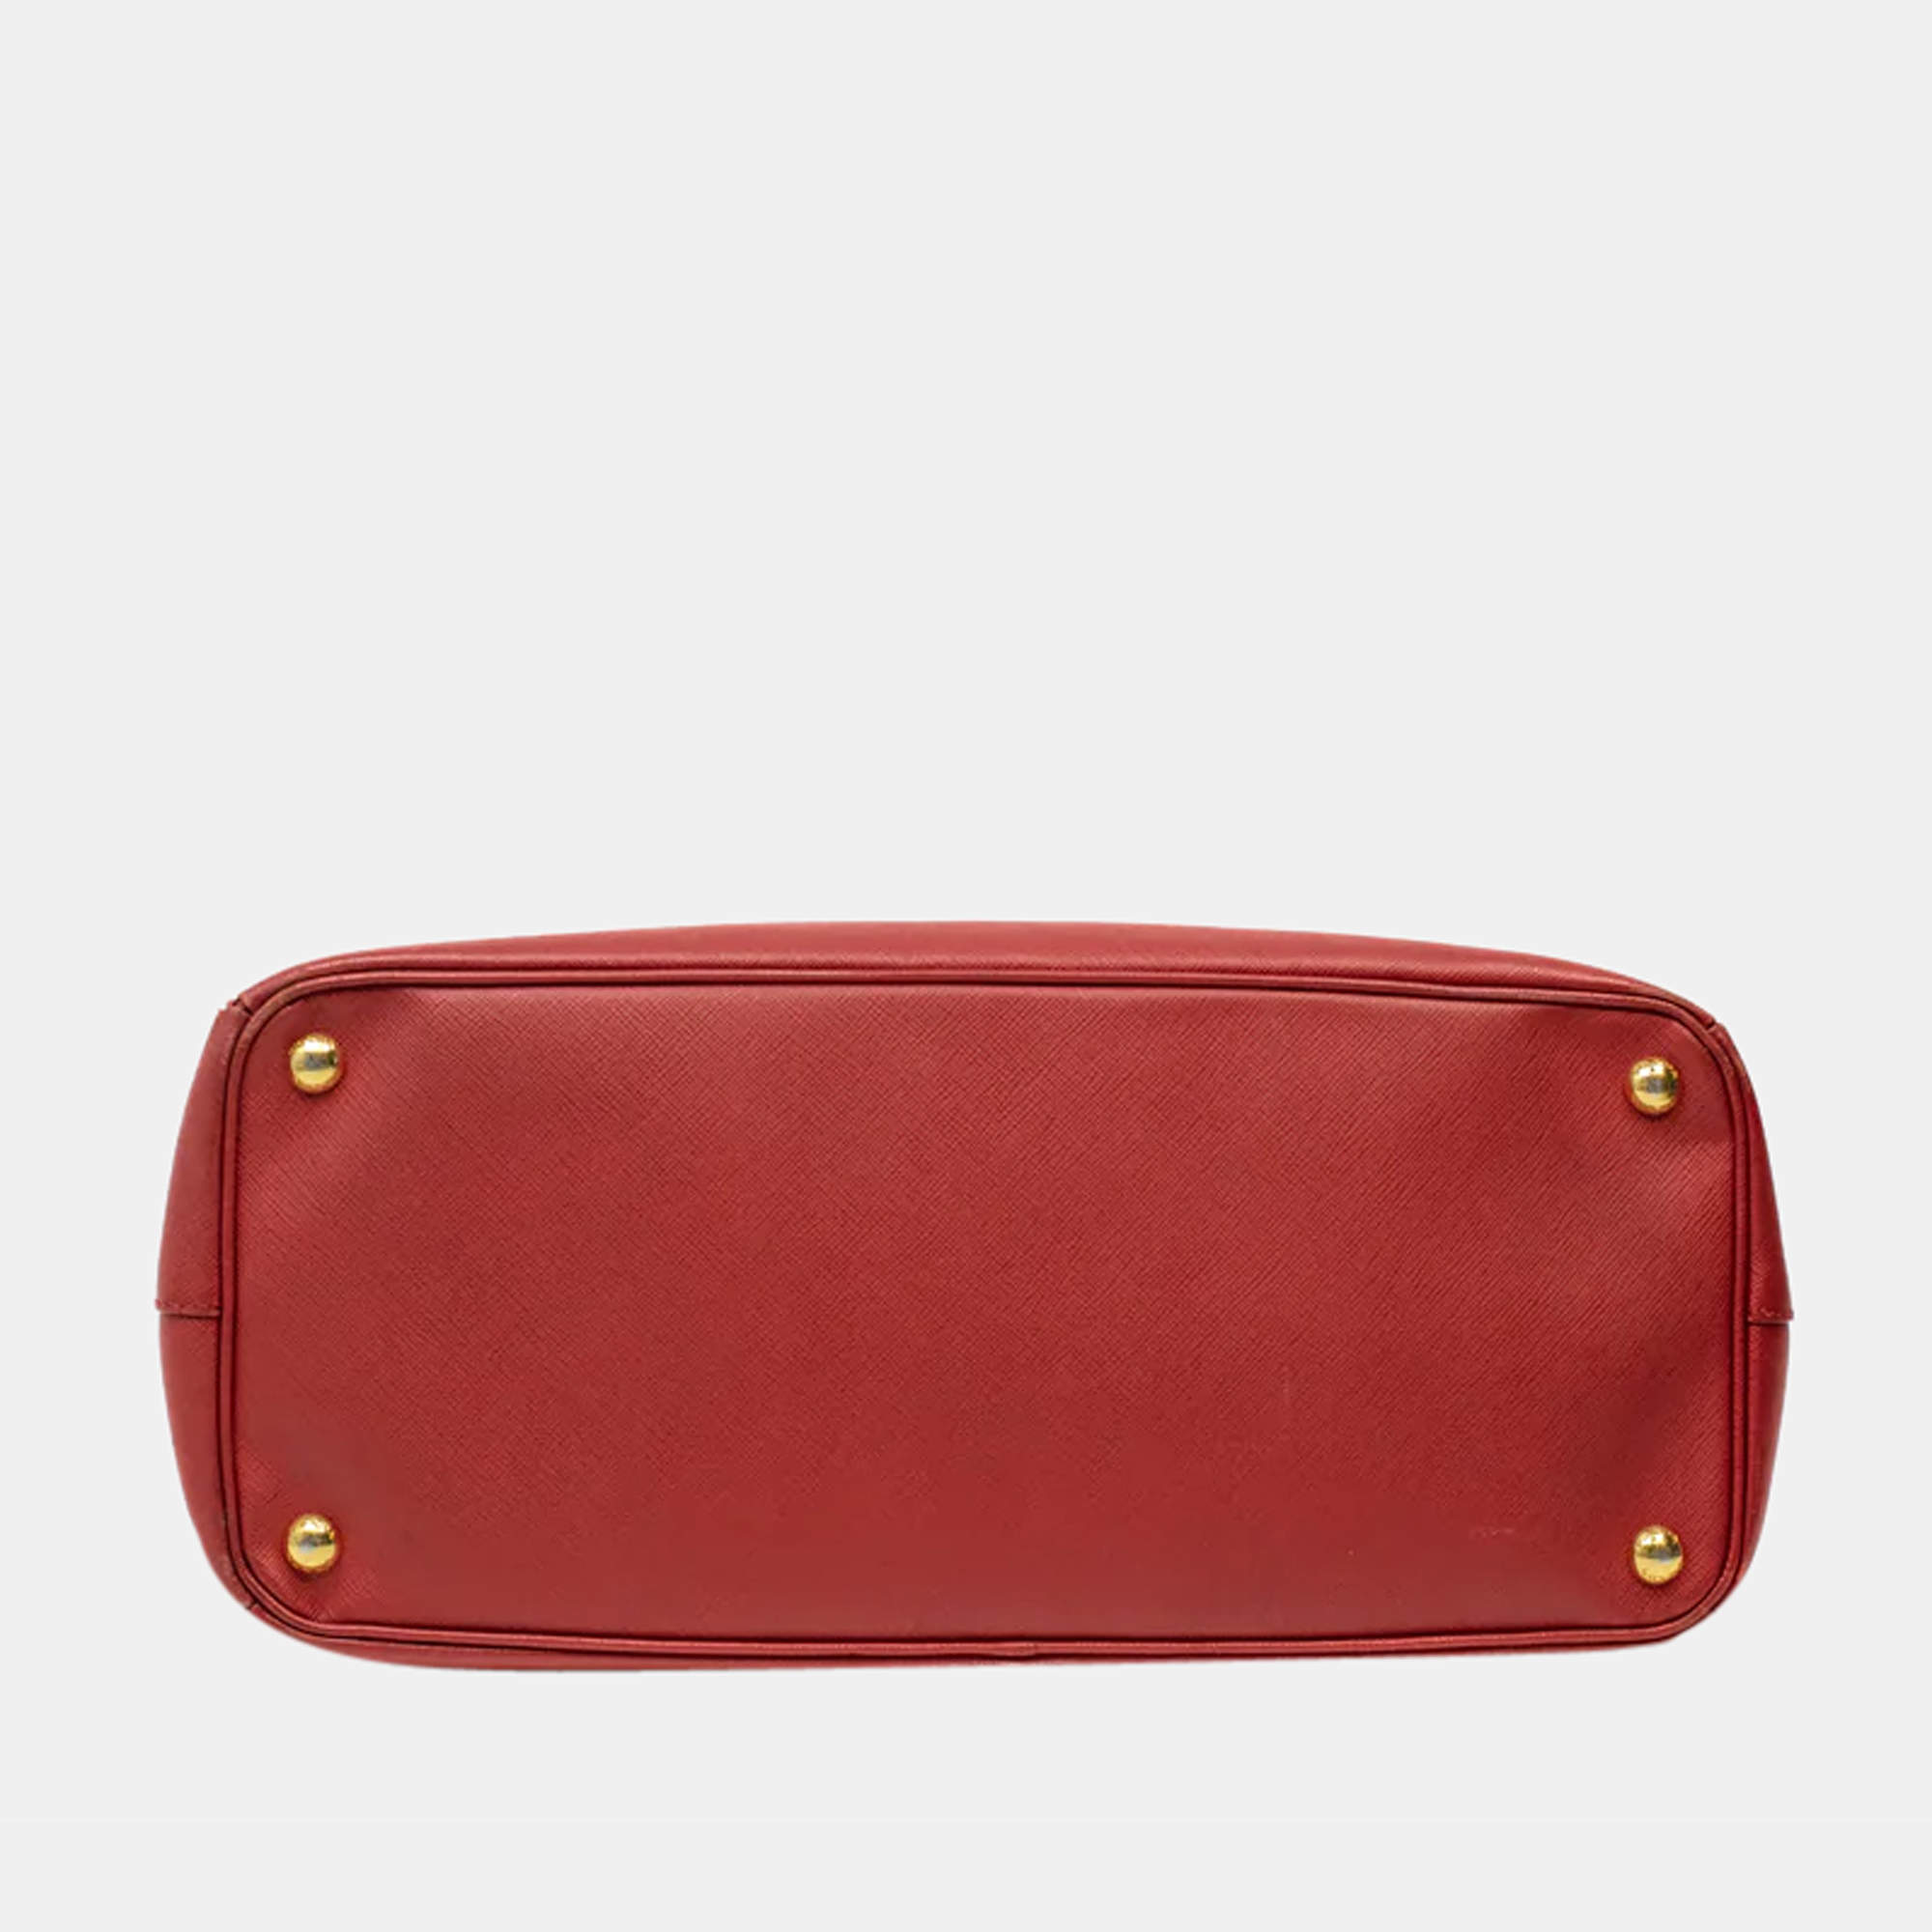 Prada Saffiano Double Red Leather Large Shoulder Tote Handbag